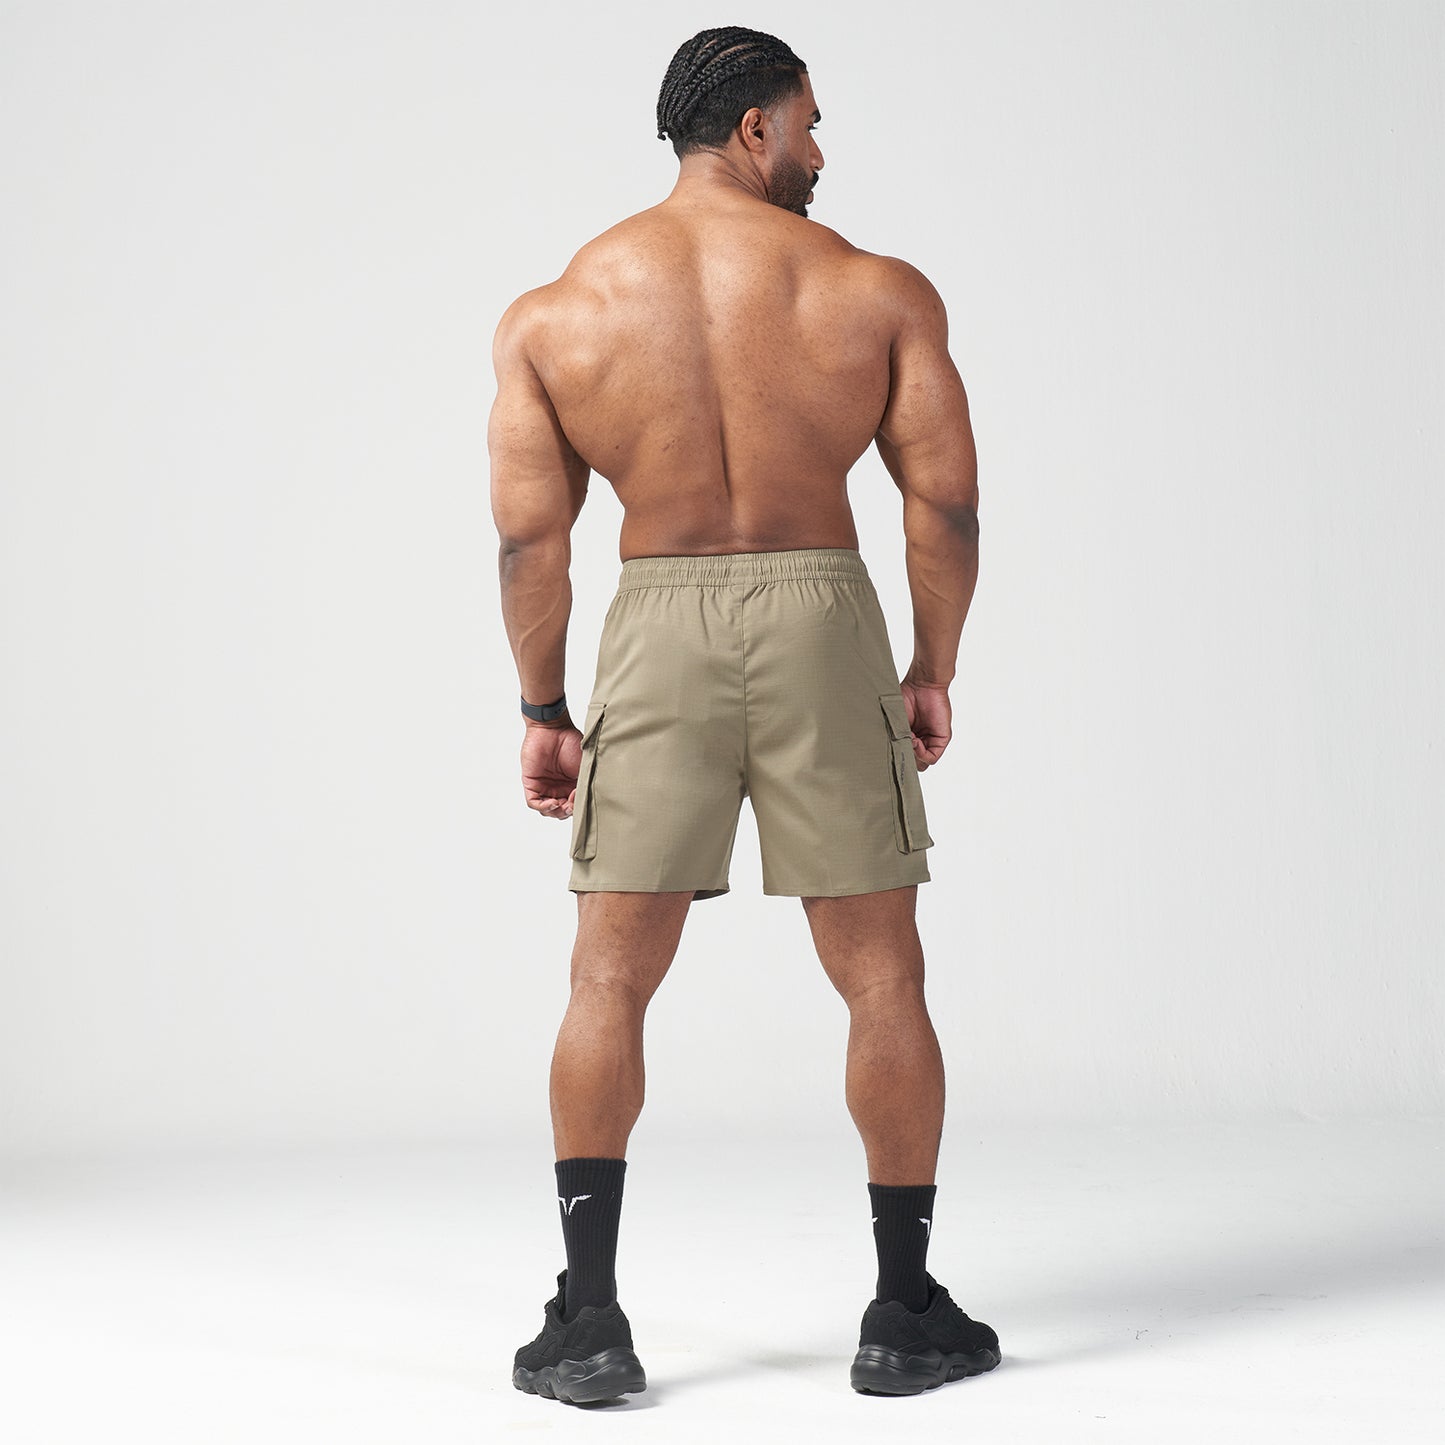 squatwolf-gym-wear-code-urban-cargo-shorts-deep-lichen-green-workout-short-for-men